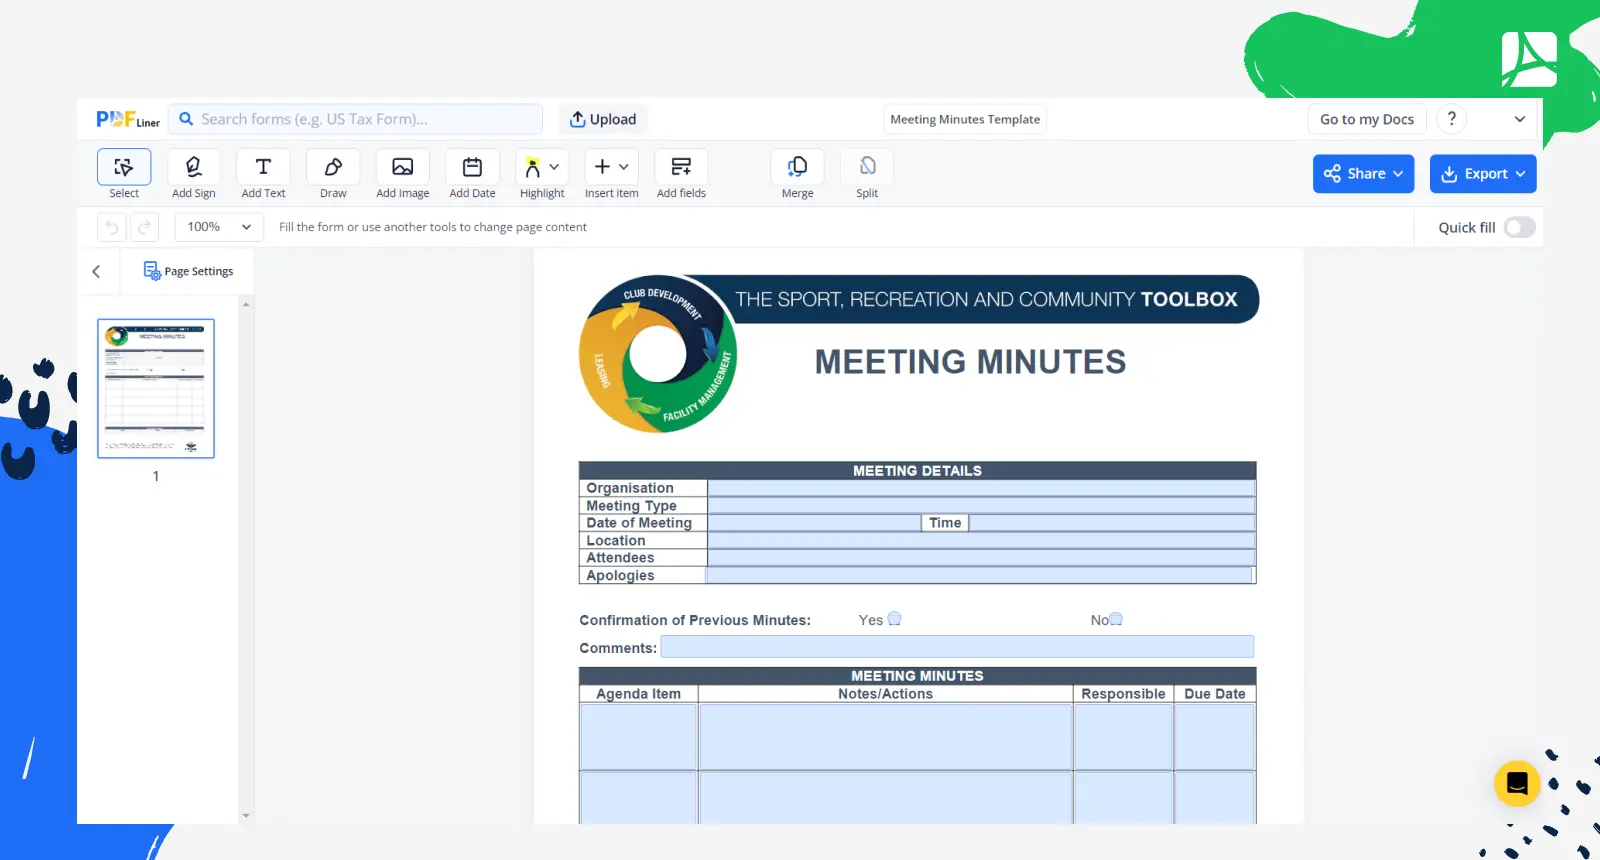 Meeting Minutes Template Form Screenshot